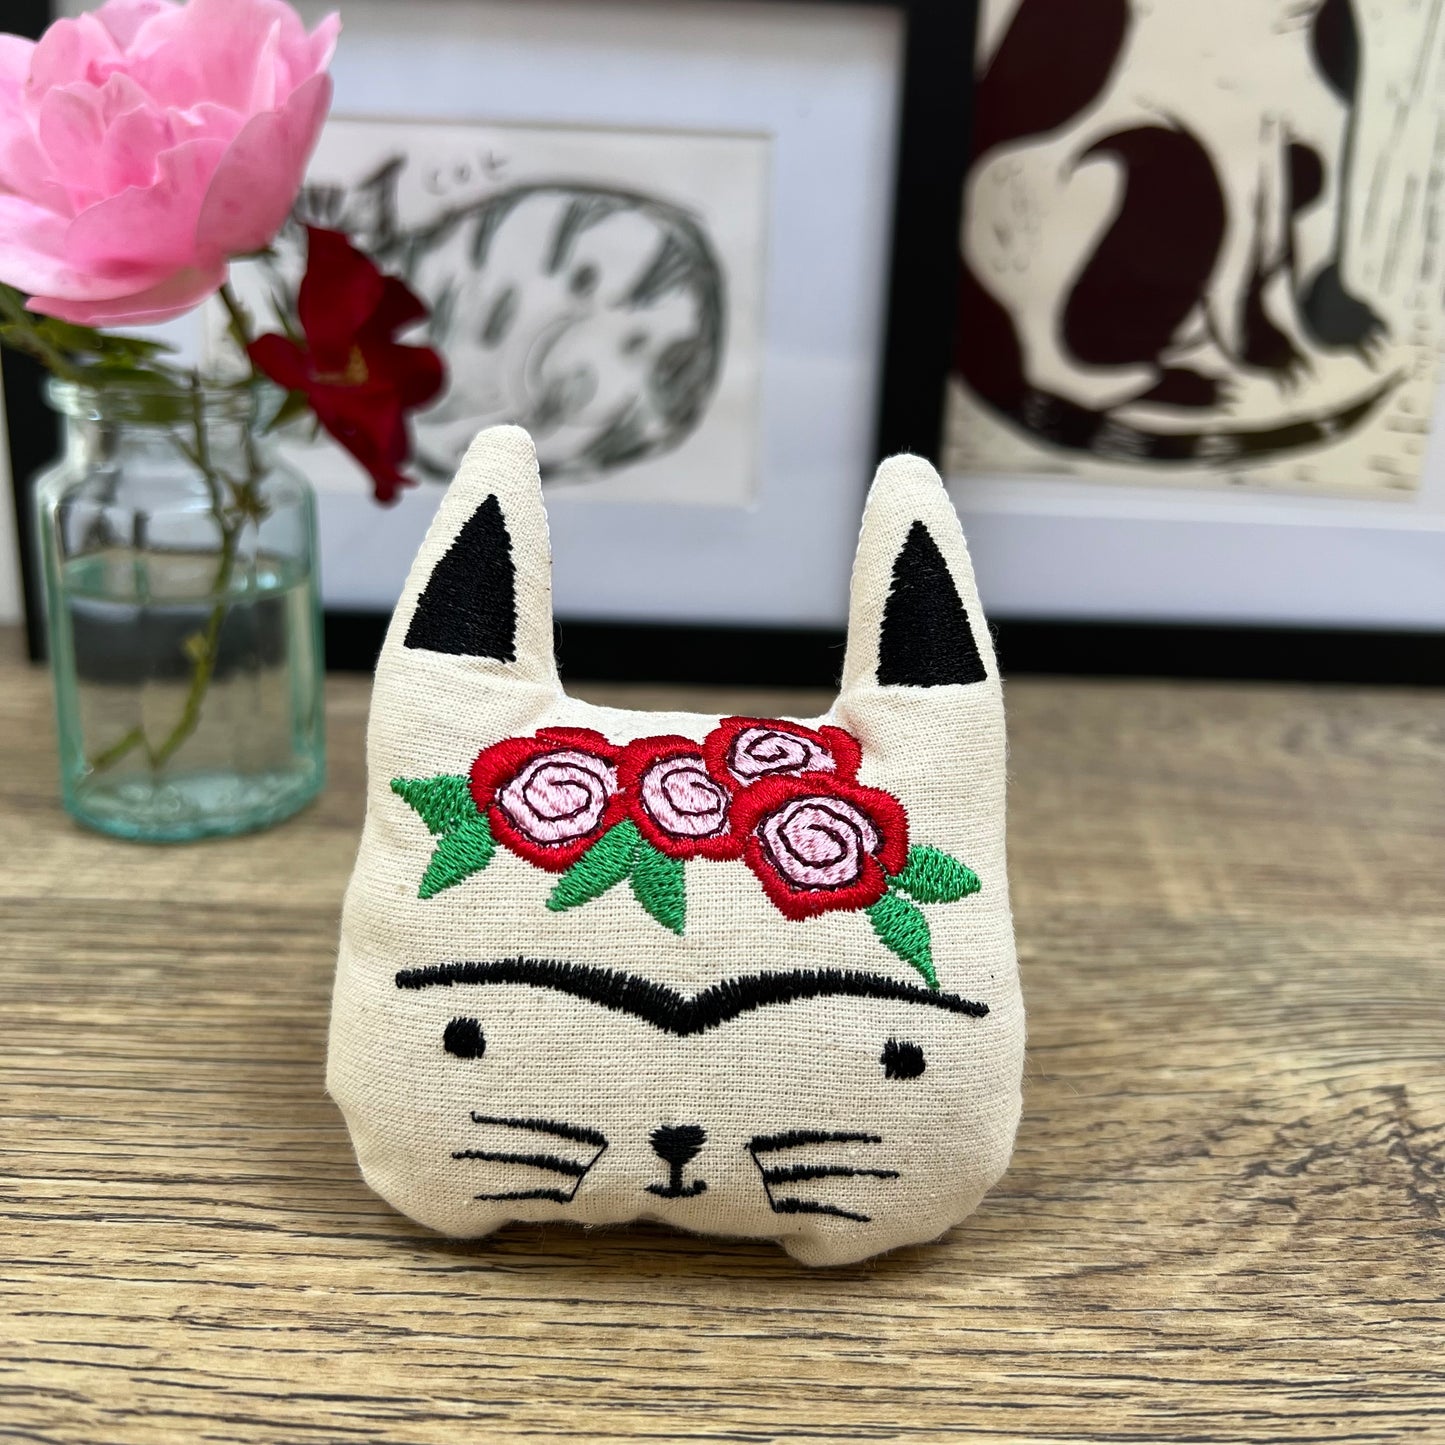 Freak Meowt Luxury Cat Toys, Gifts for Cats Frida Kahlo